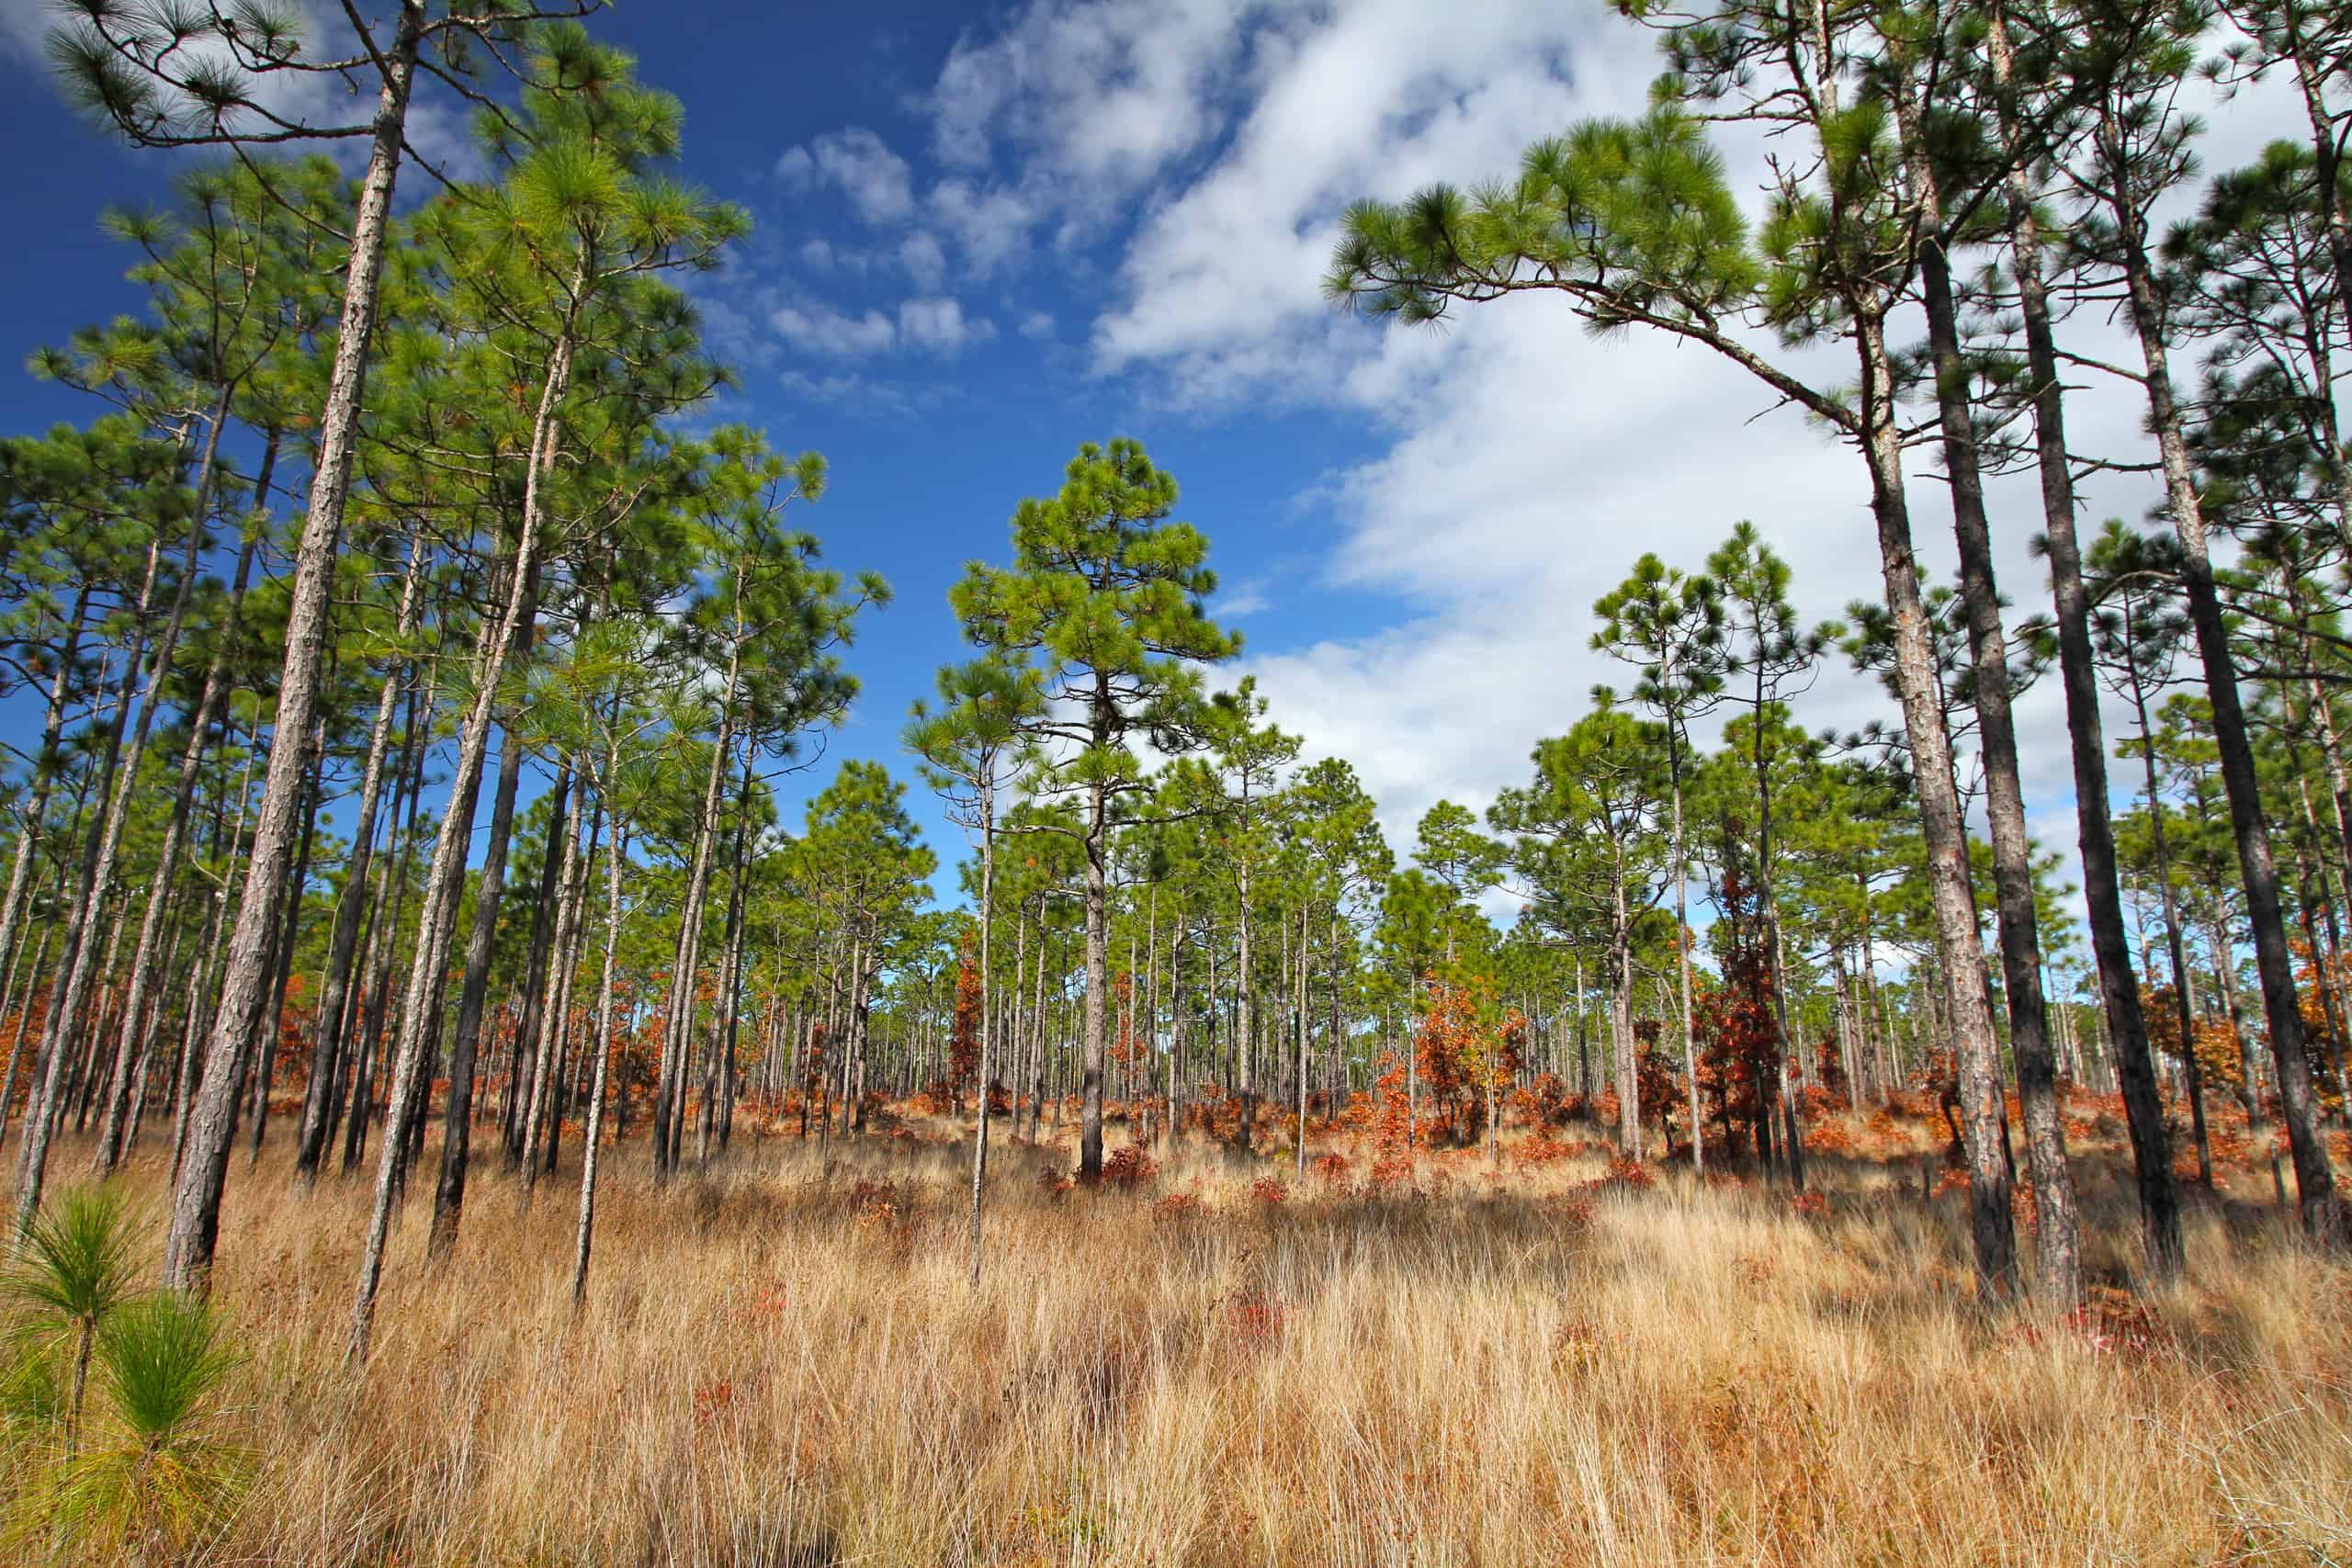 Rows of longleaf pine trees in a field.